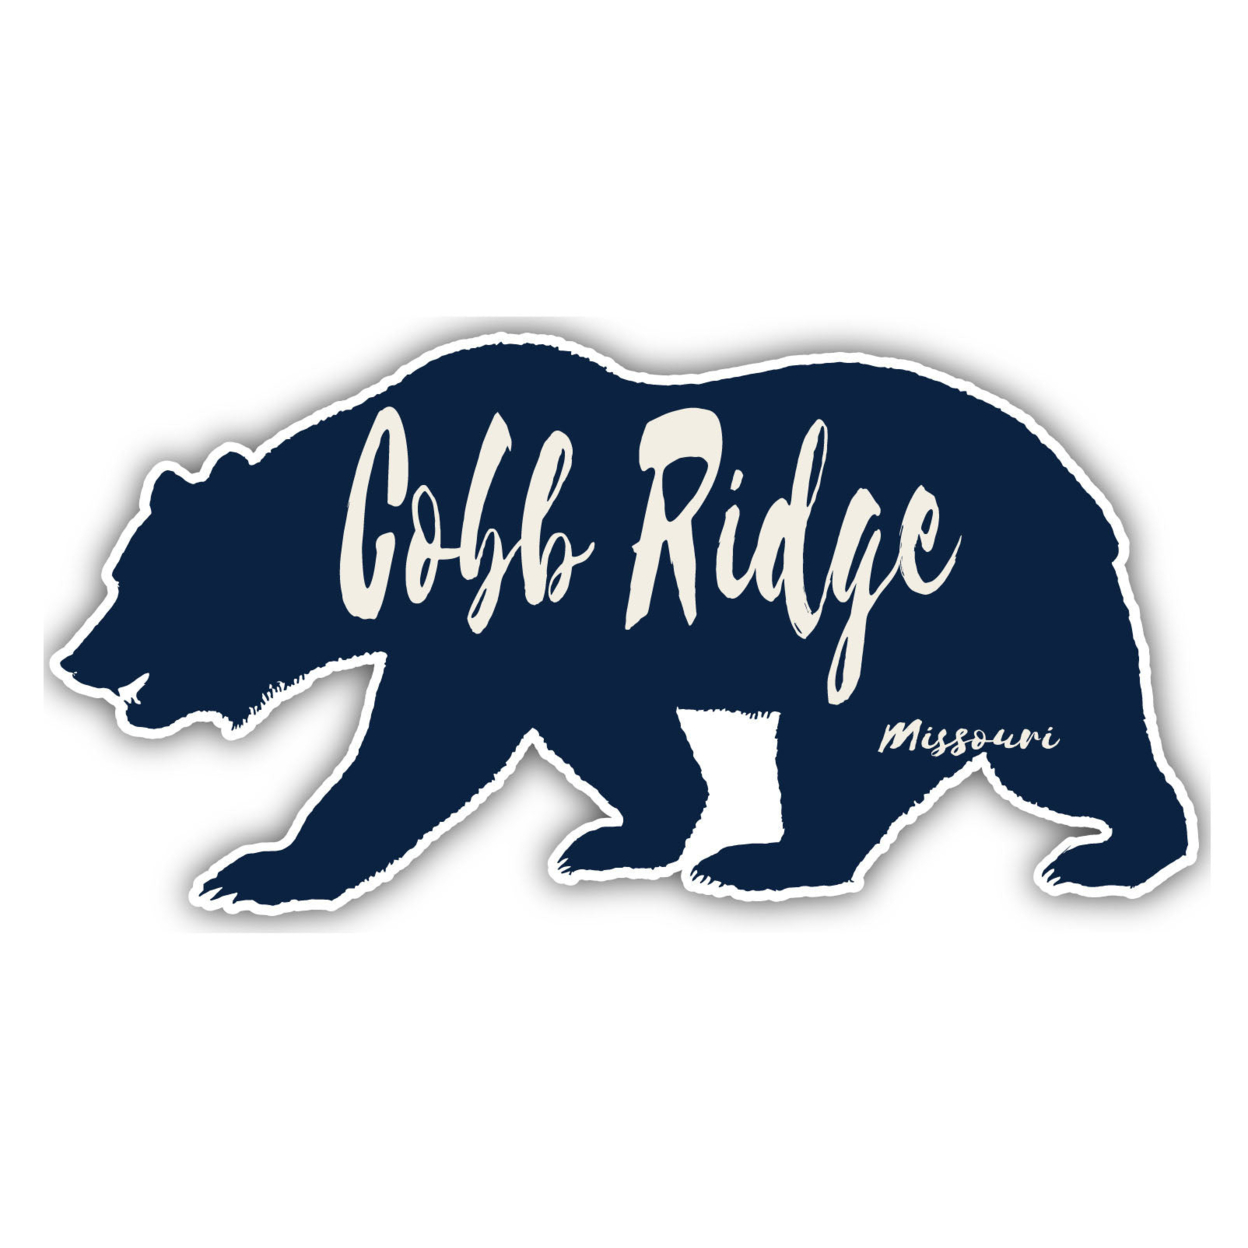 Cobb Ridge Missouri Souvenir Decorative Stickers (Choose Theme And Size) - Single Unit, 12-Inch, Bear